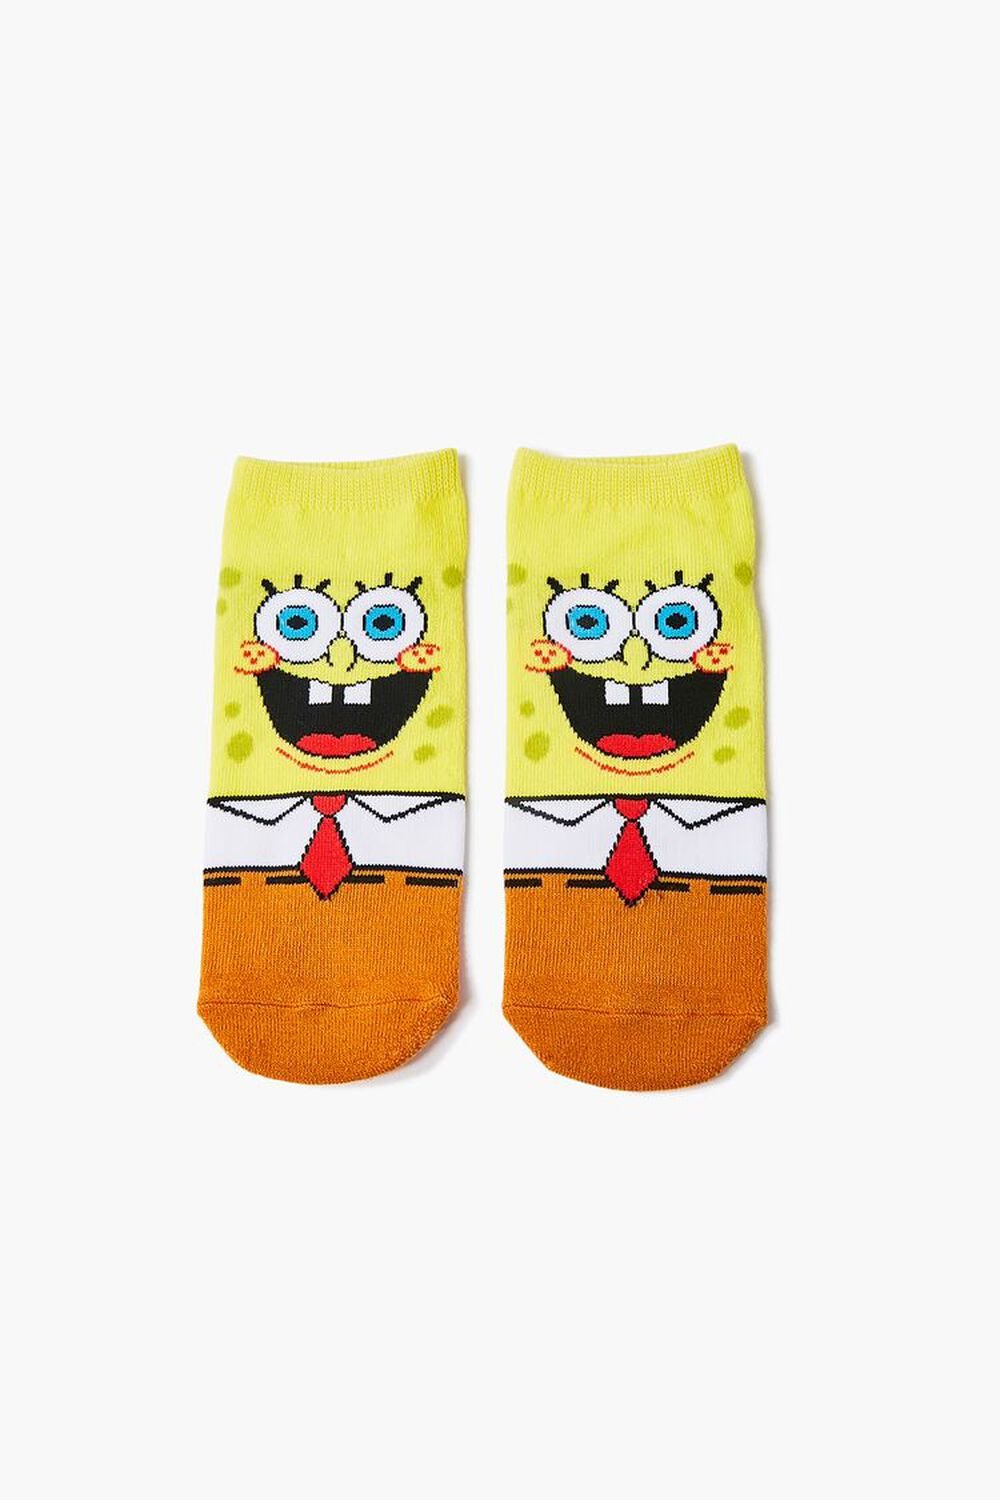 YELLOW/MULTI SpongeBob SquarePants Ankle Socks, image 1